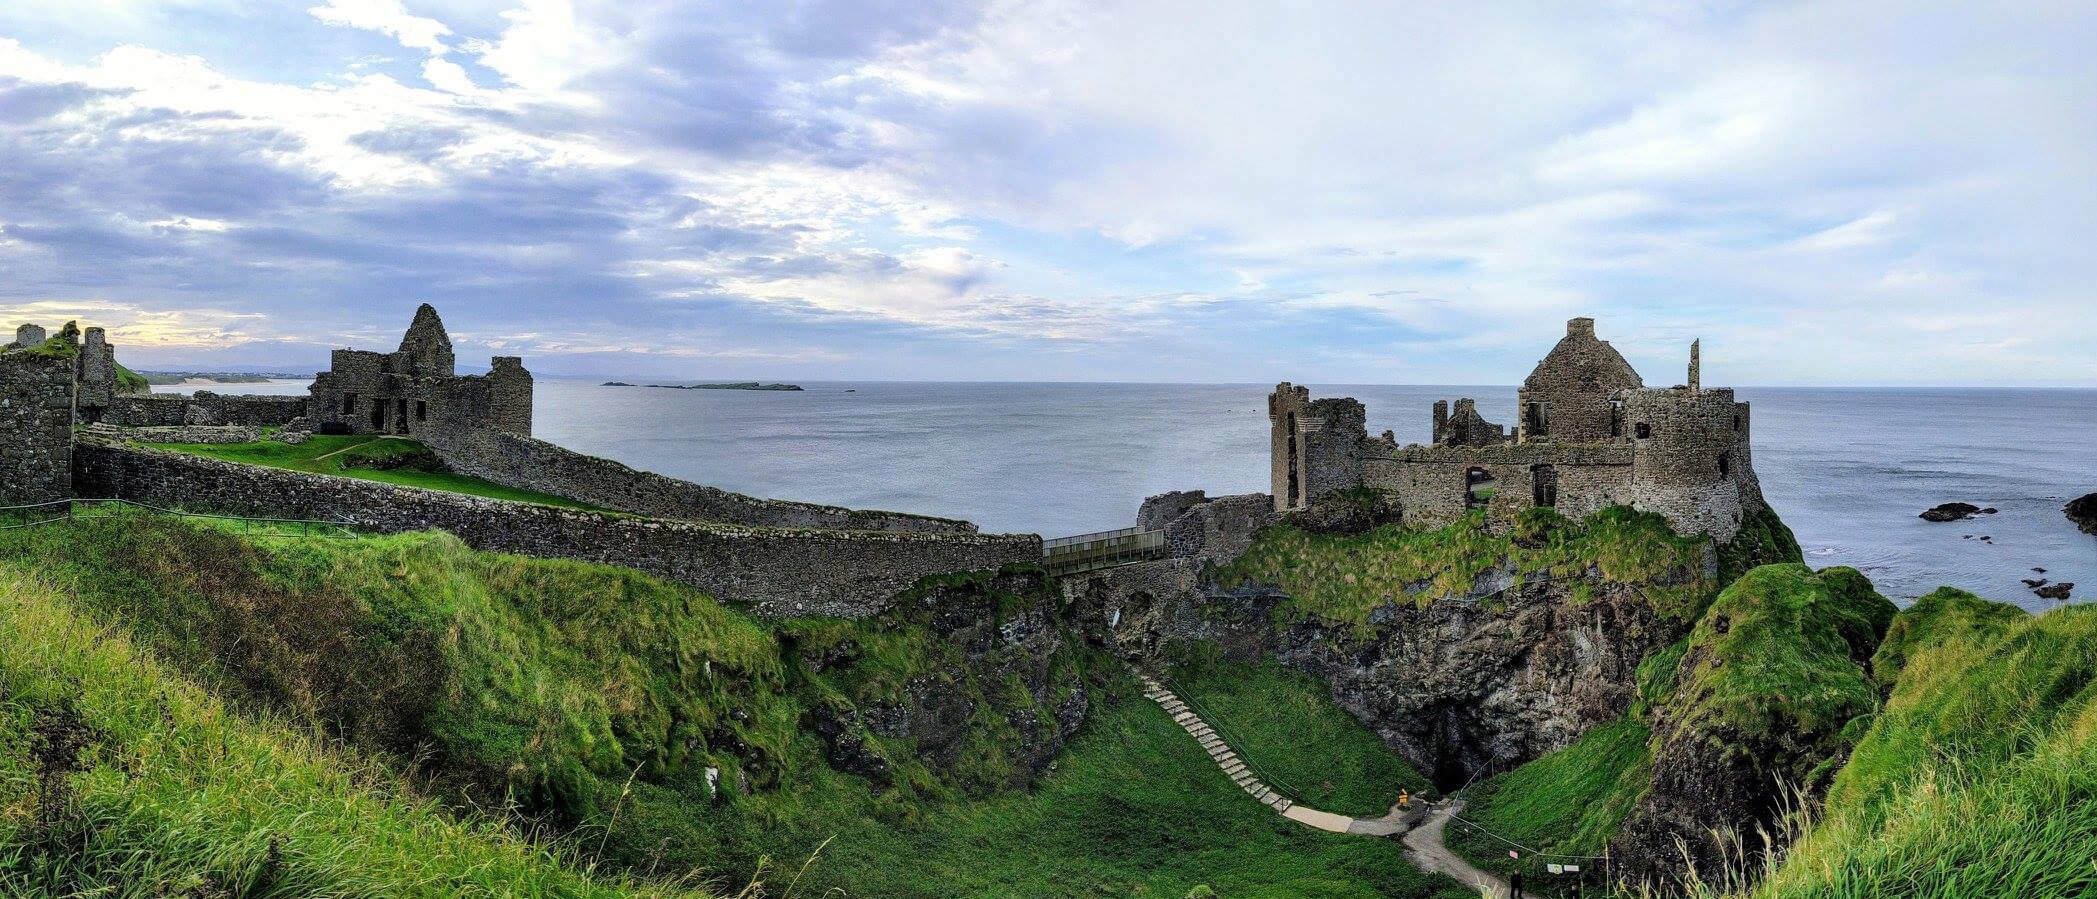 Ruins of Dunluce castle on the Antrim coast